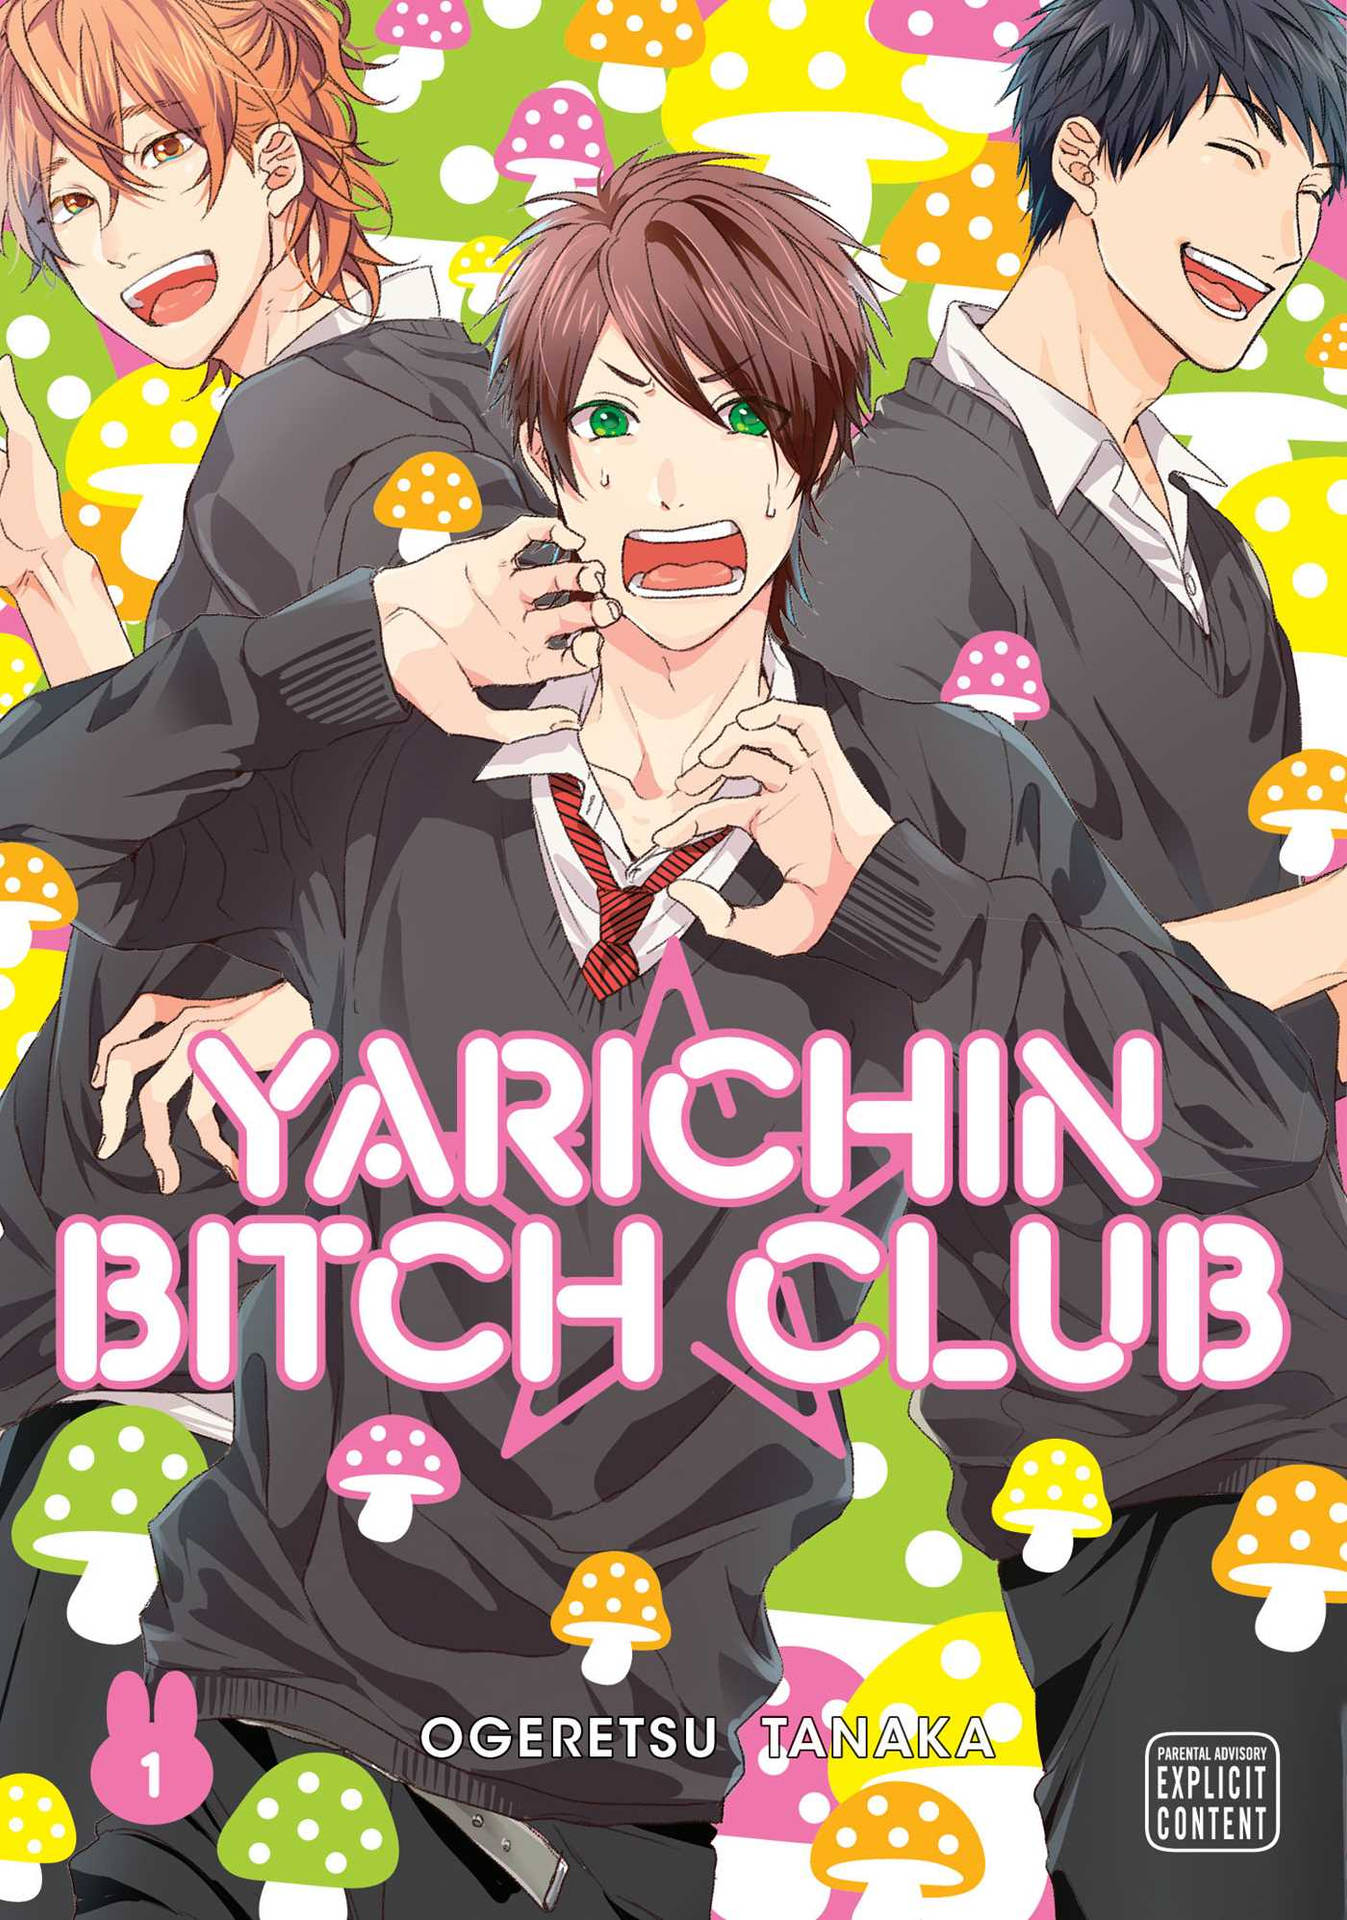 Yarichin Bitch Club Protagonists Cover